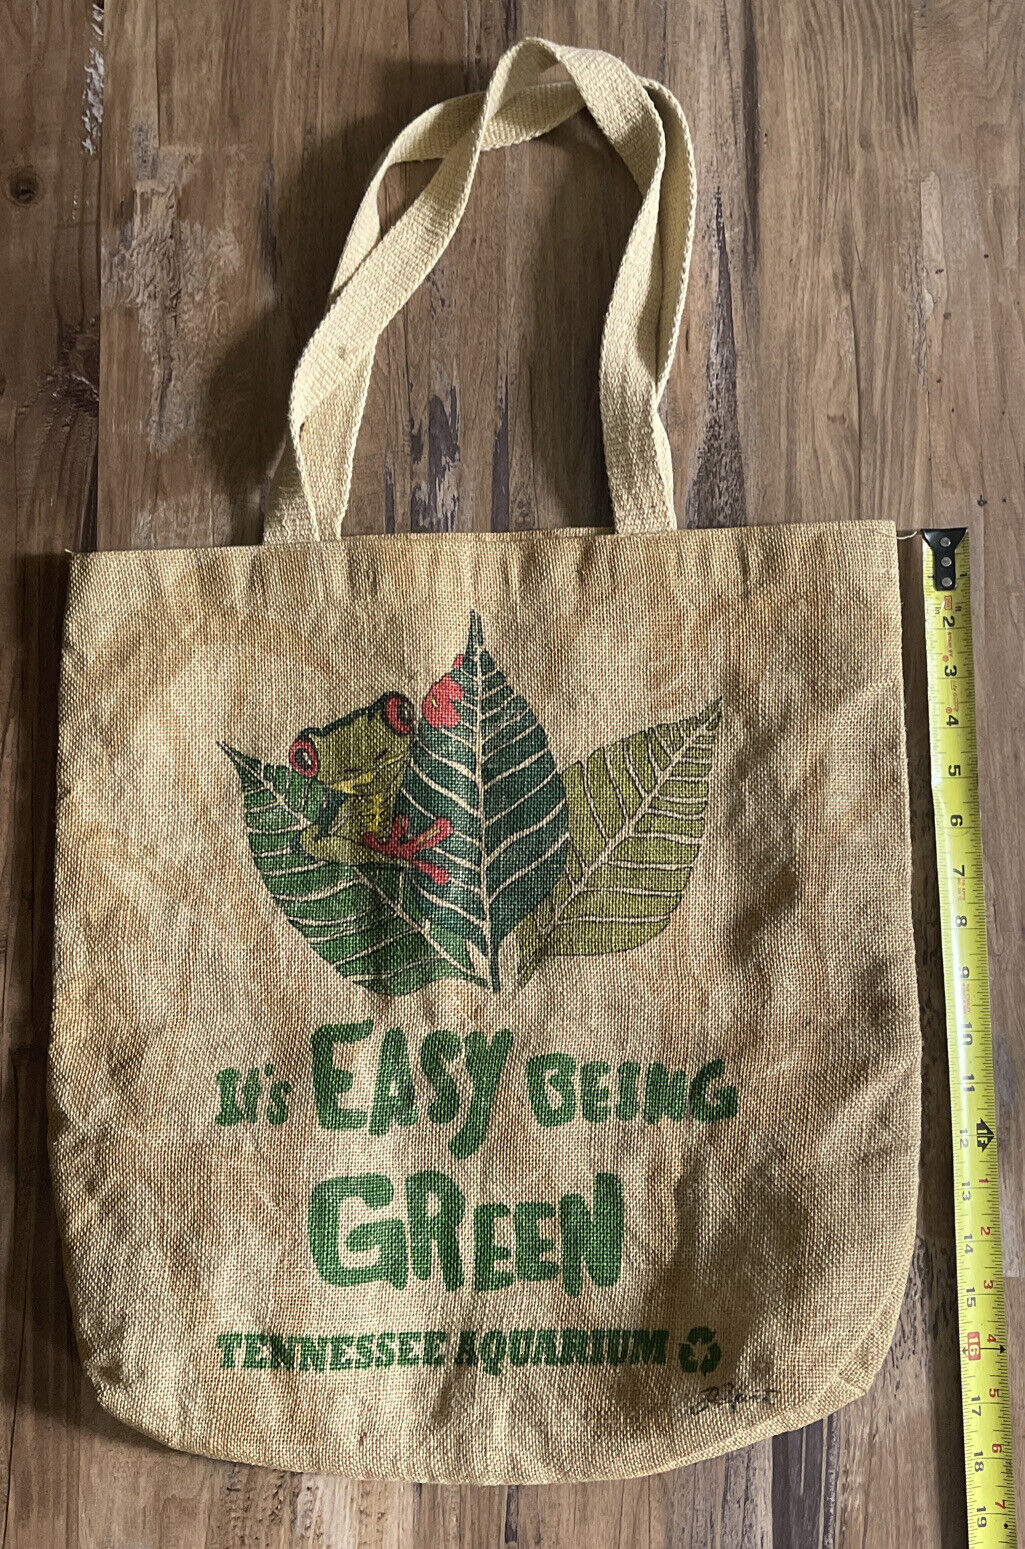 Tennessee aquarium burlap bag it’s easy being Green Jumbo 18”x18”w Lg Handles